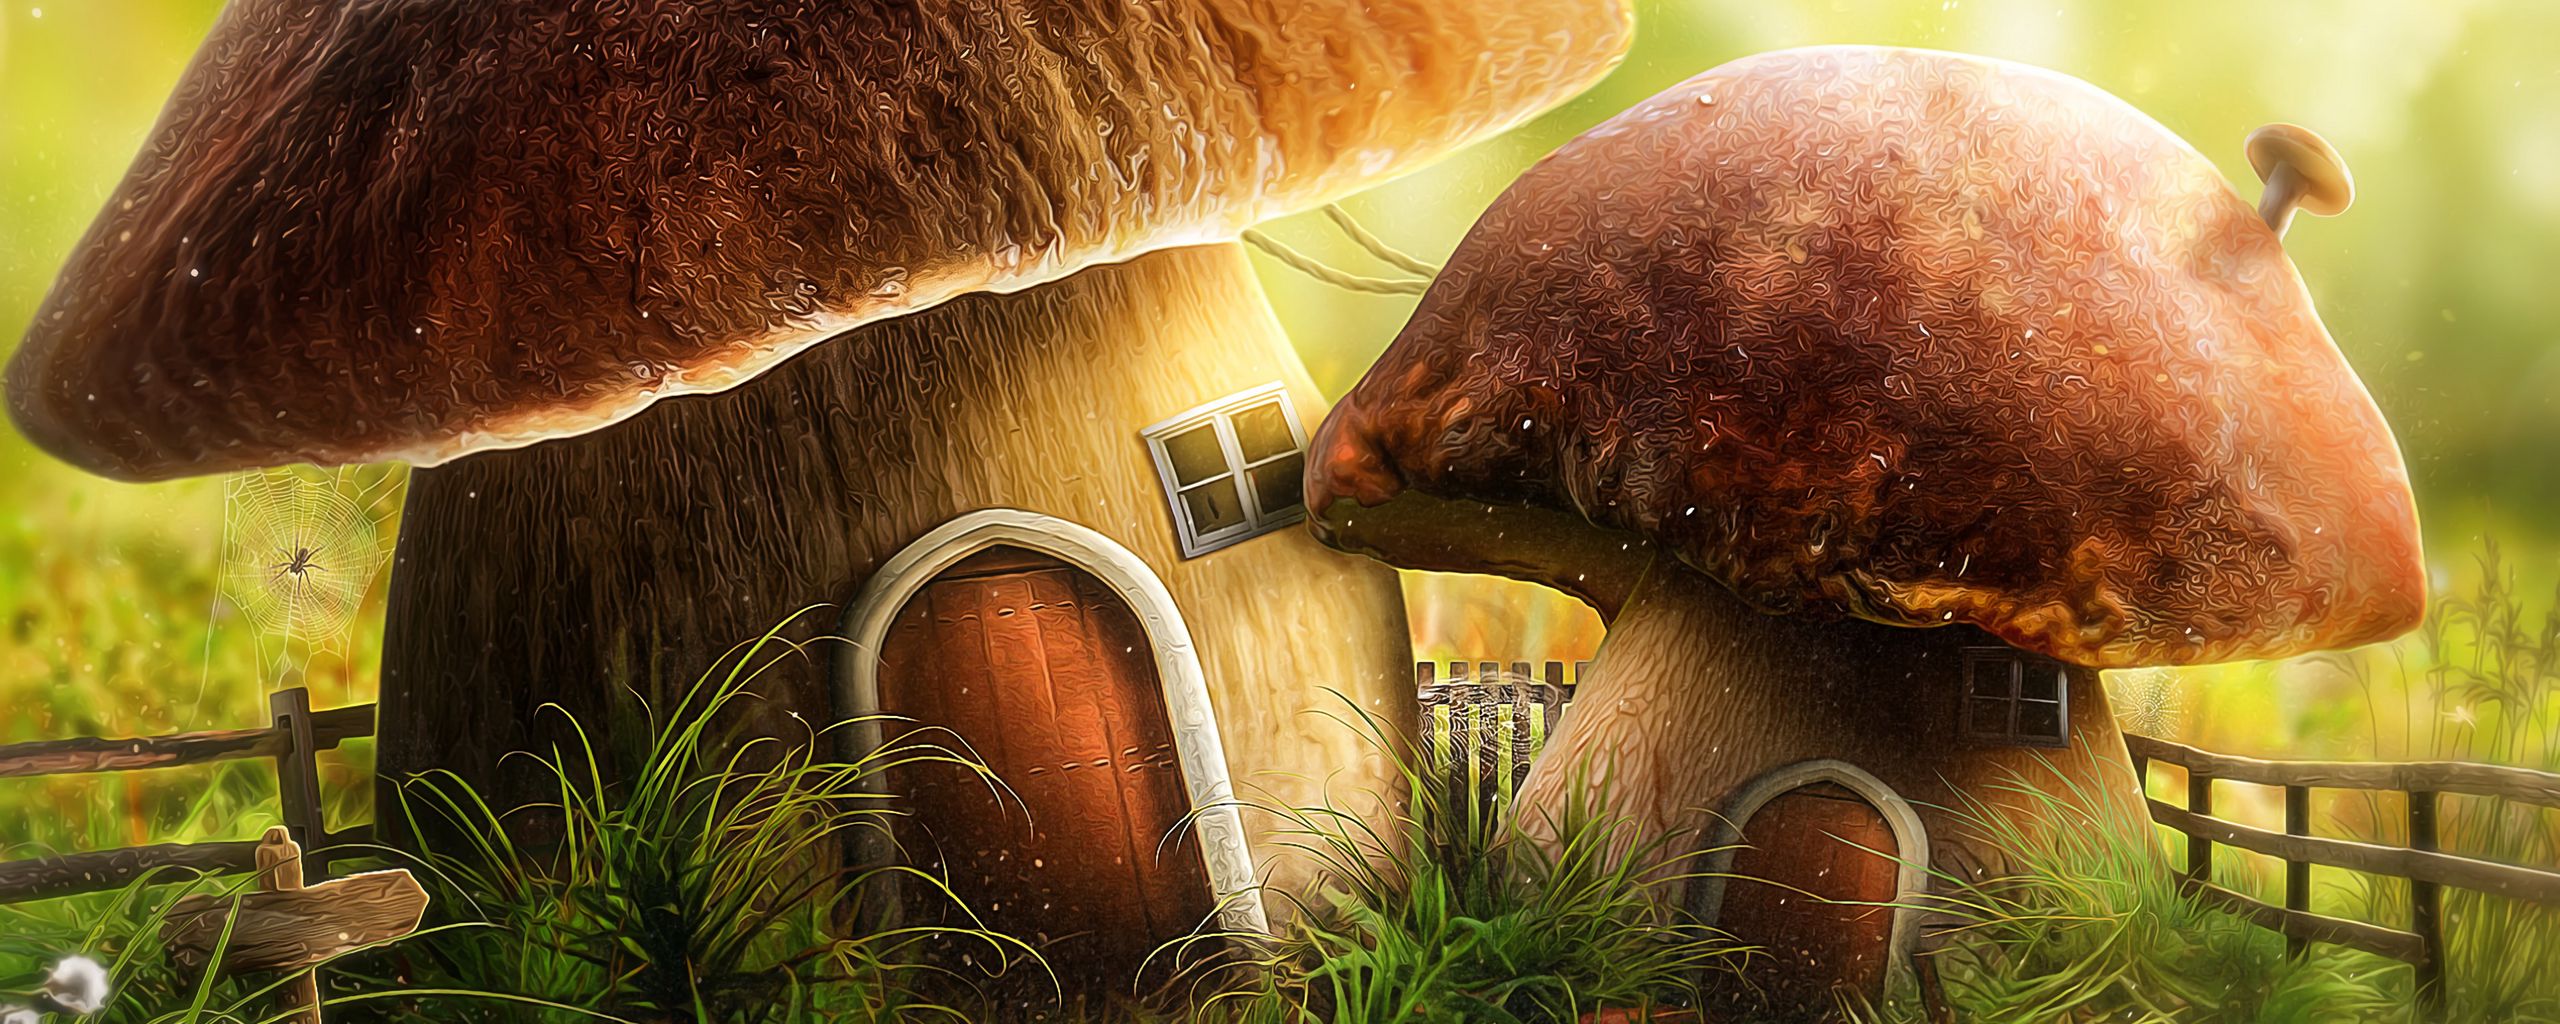 Wallpaper Mushroom House Door Art Ultrawide